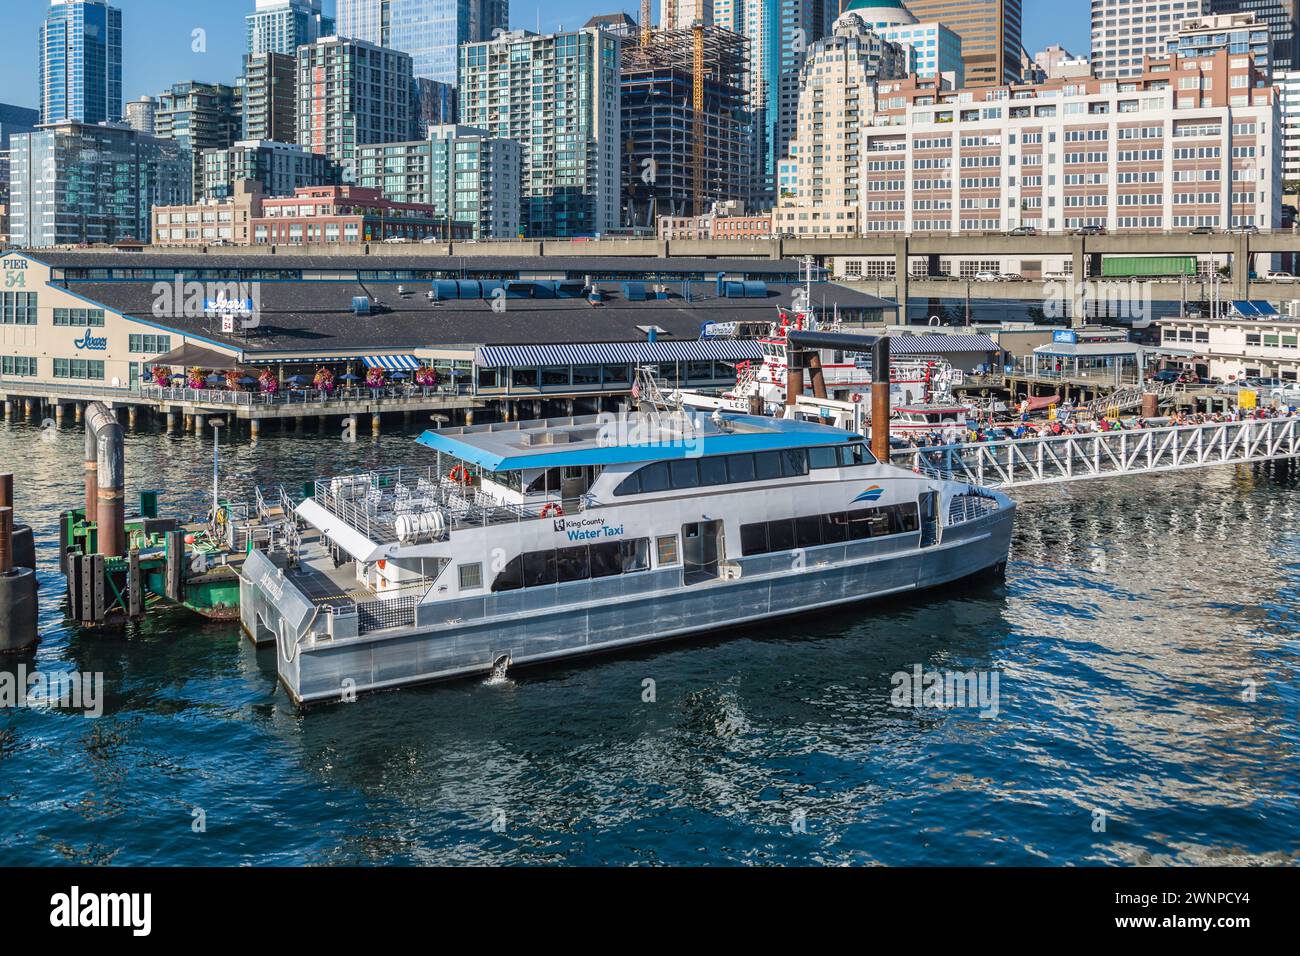 King County Water Taxi am Pier entlang der Elliot Bay Uferpromenade von Seattle, Washington Stockfoto